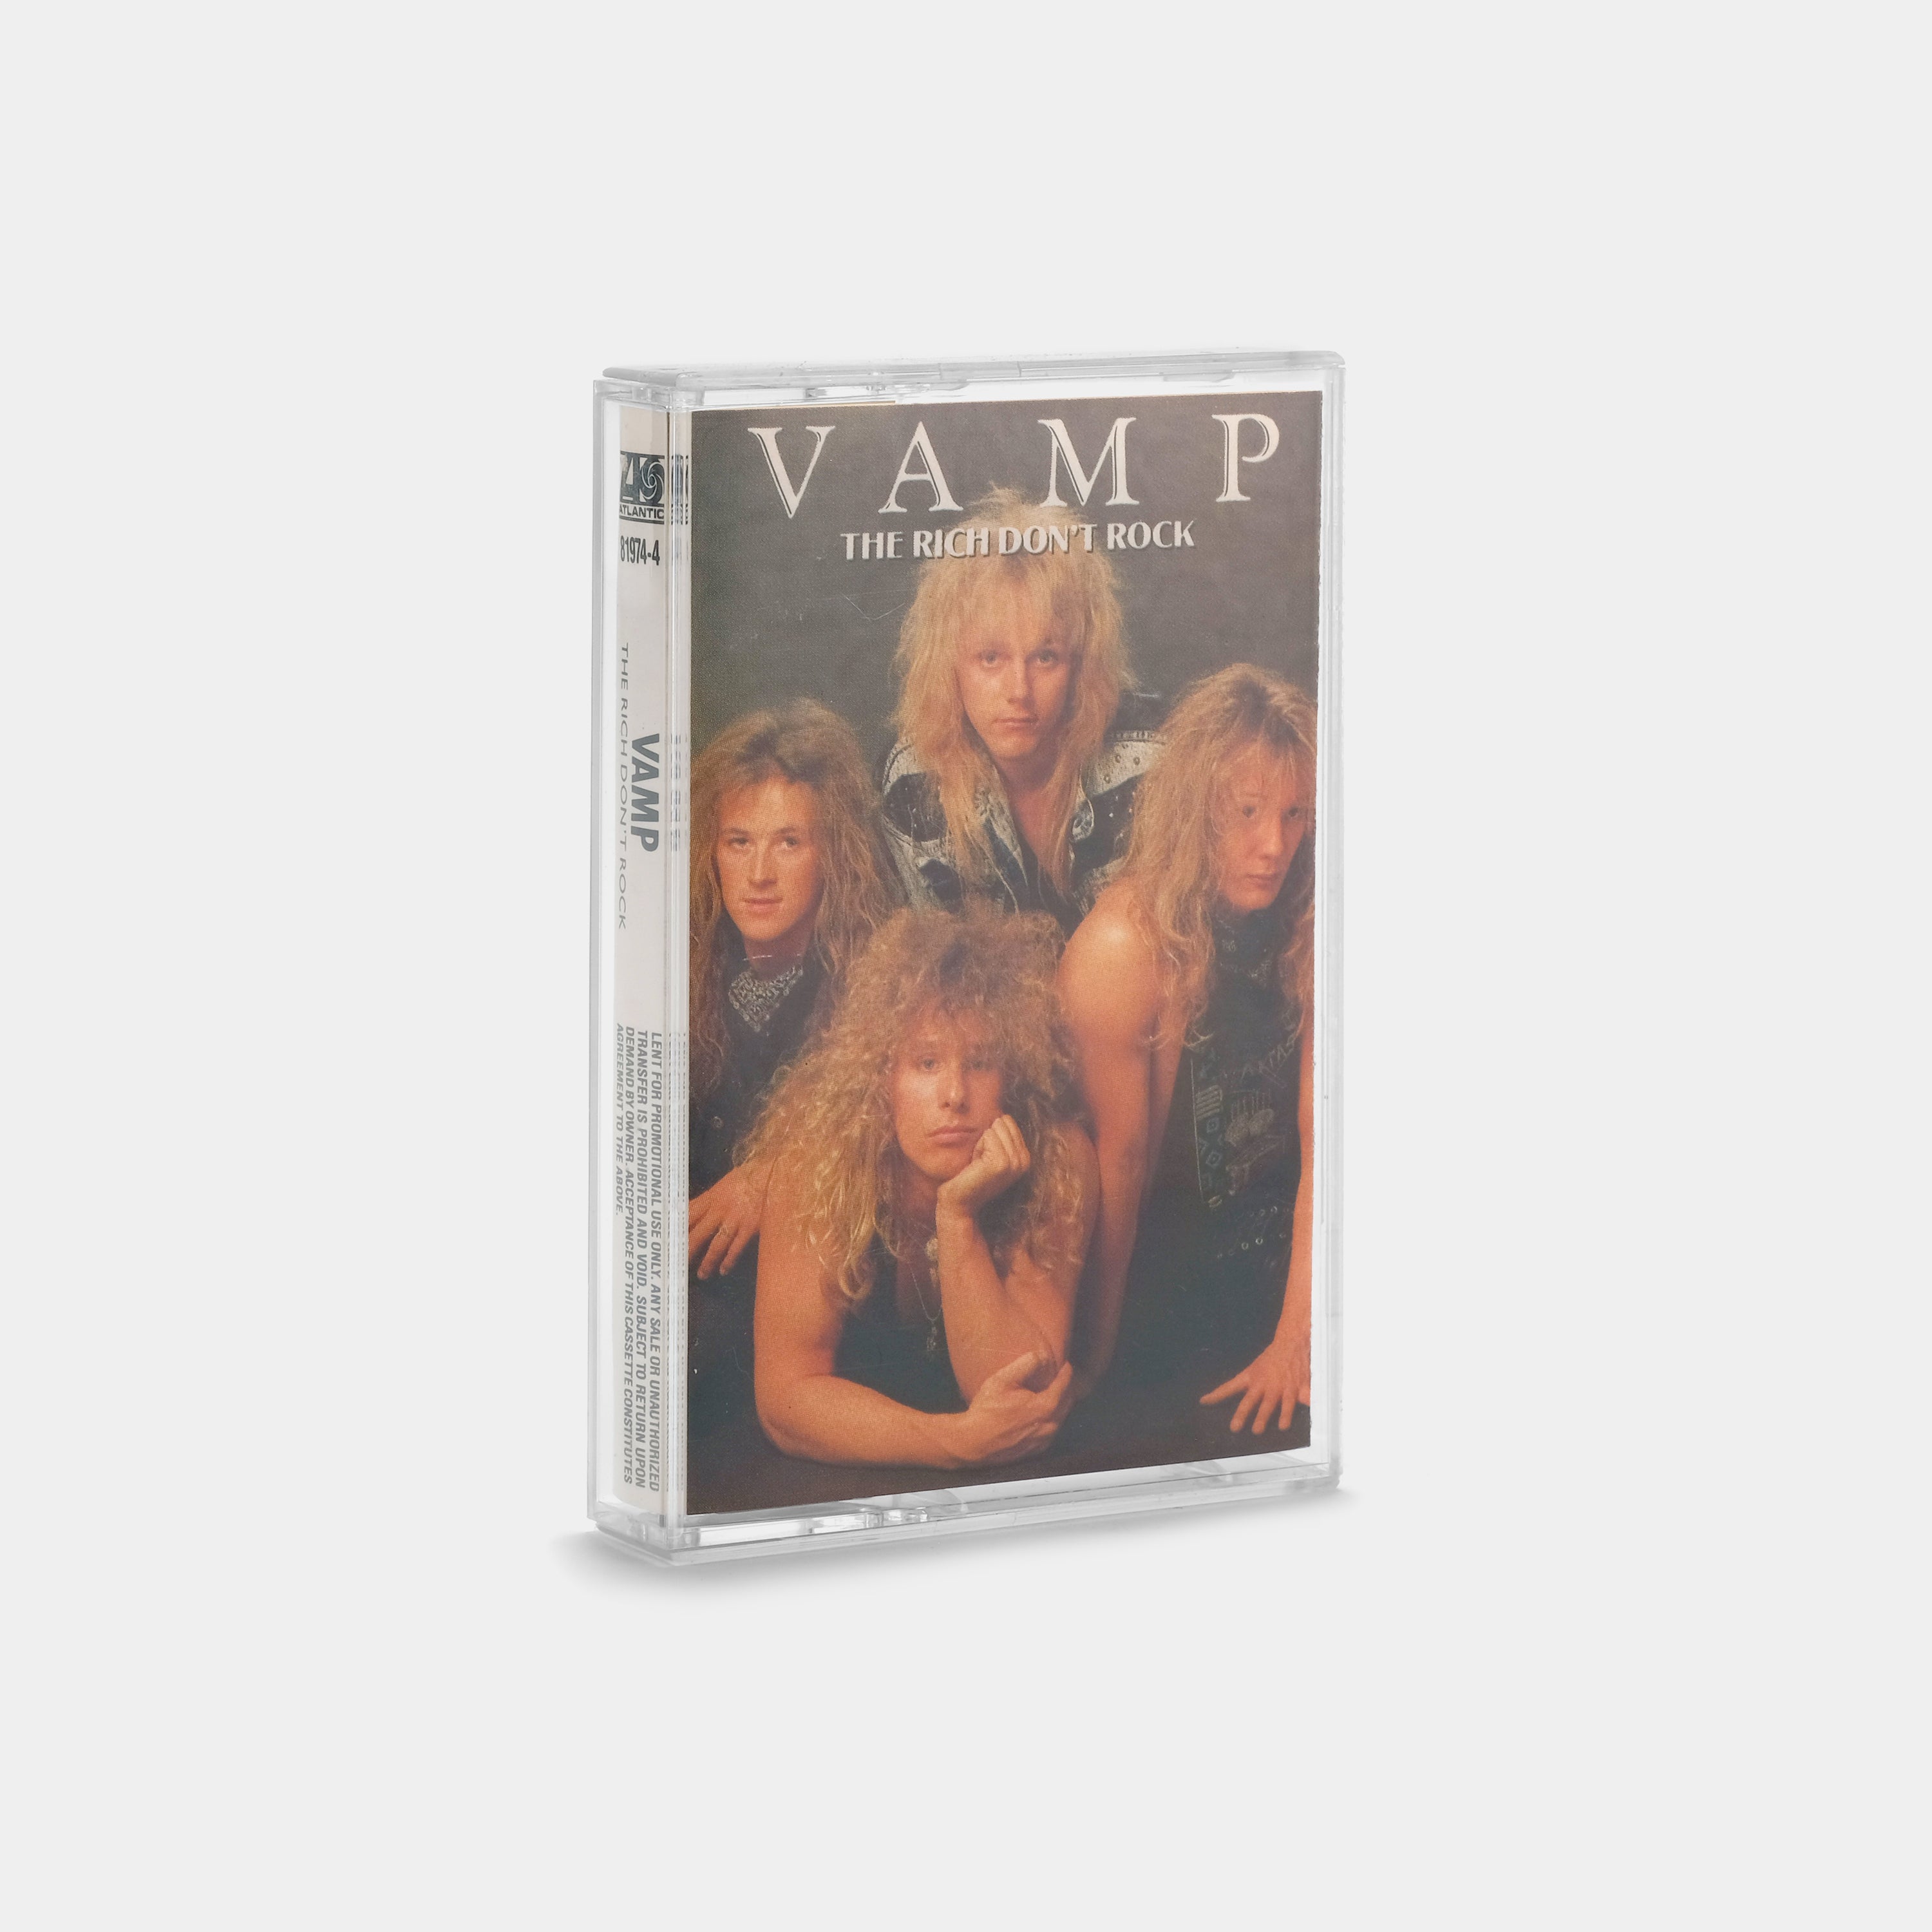 Vamp - The Rich Don't Rock Cassette Tape